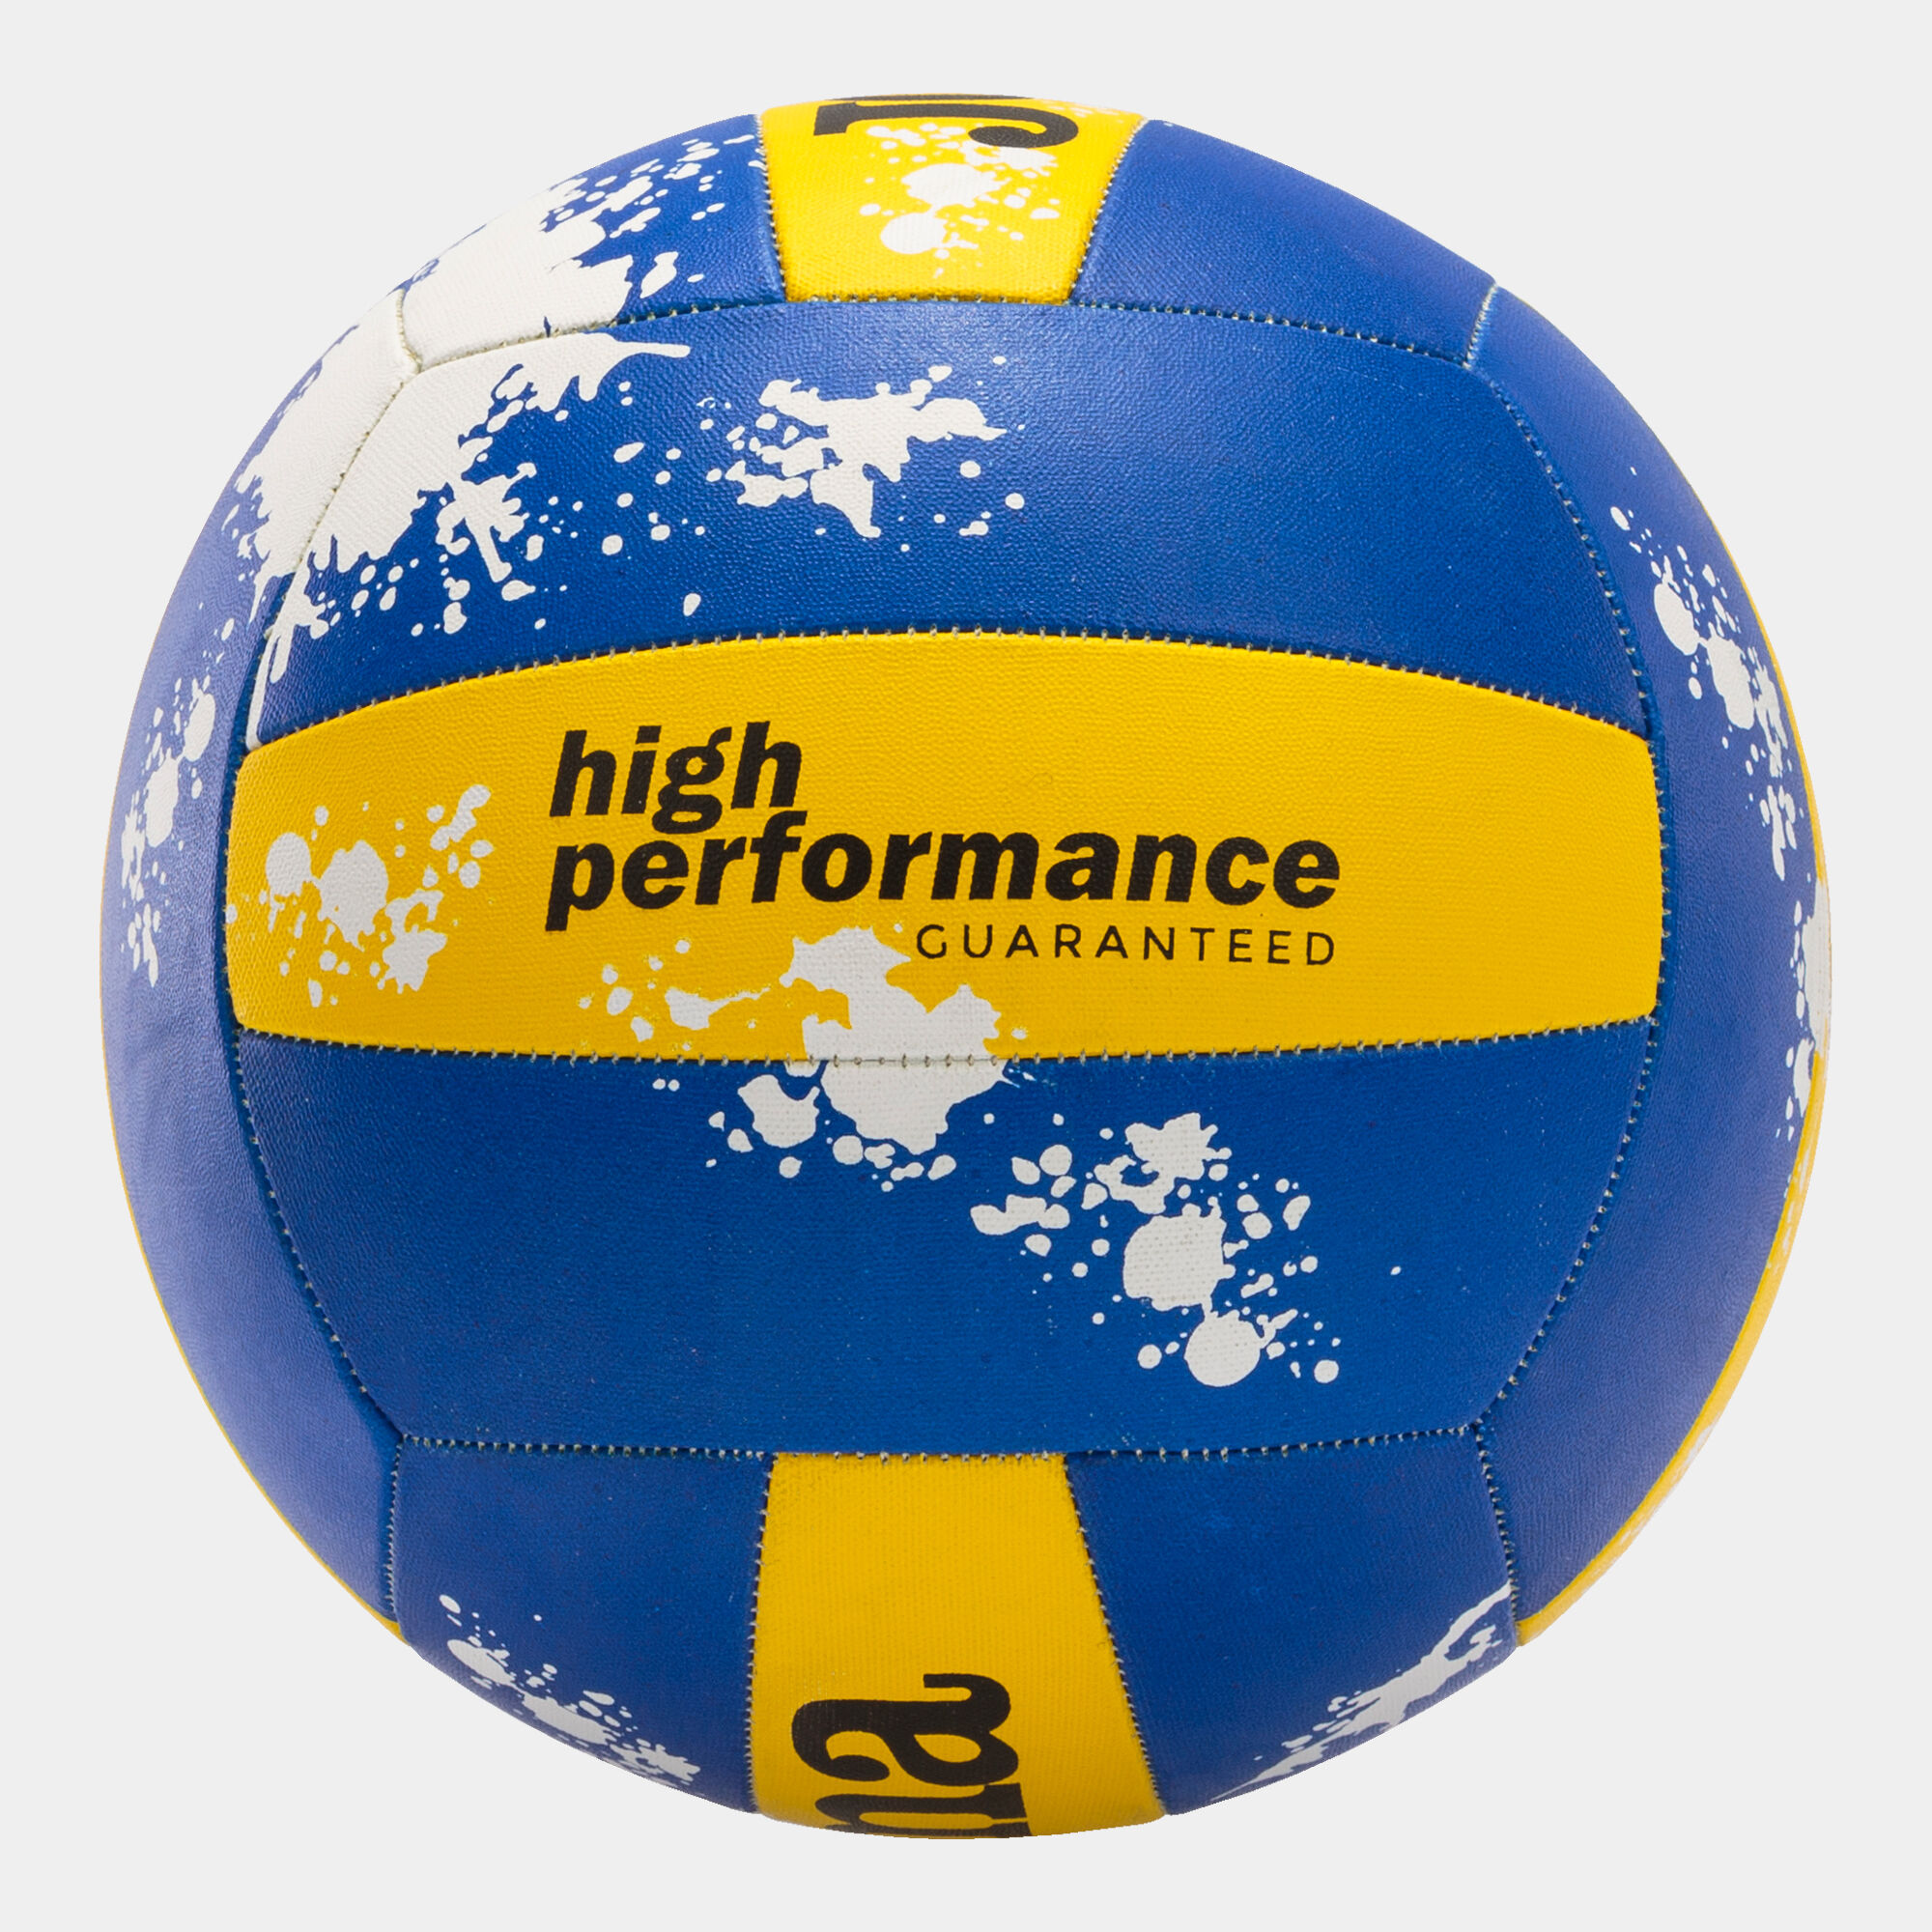 Bola voleibol High Performance azul royal amarelo